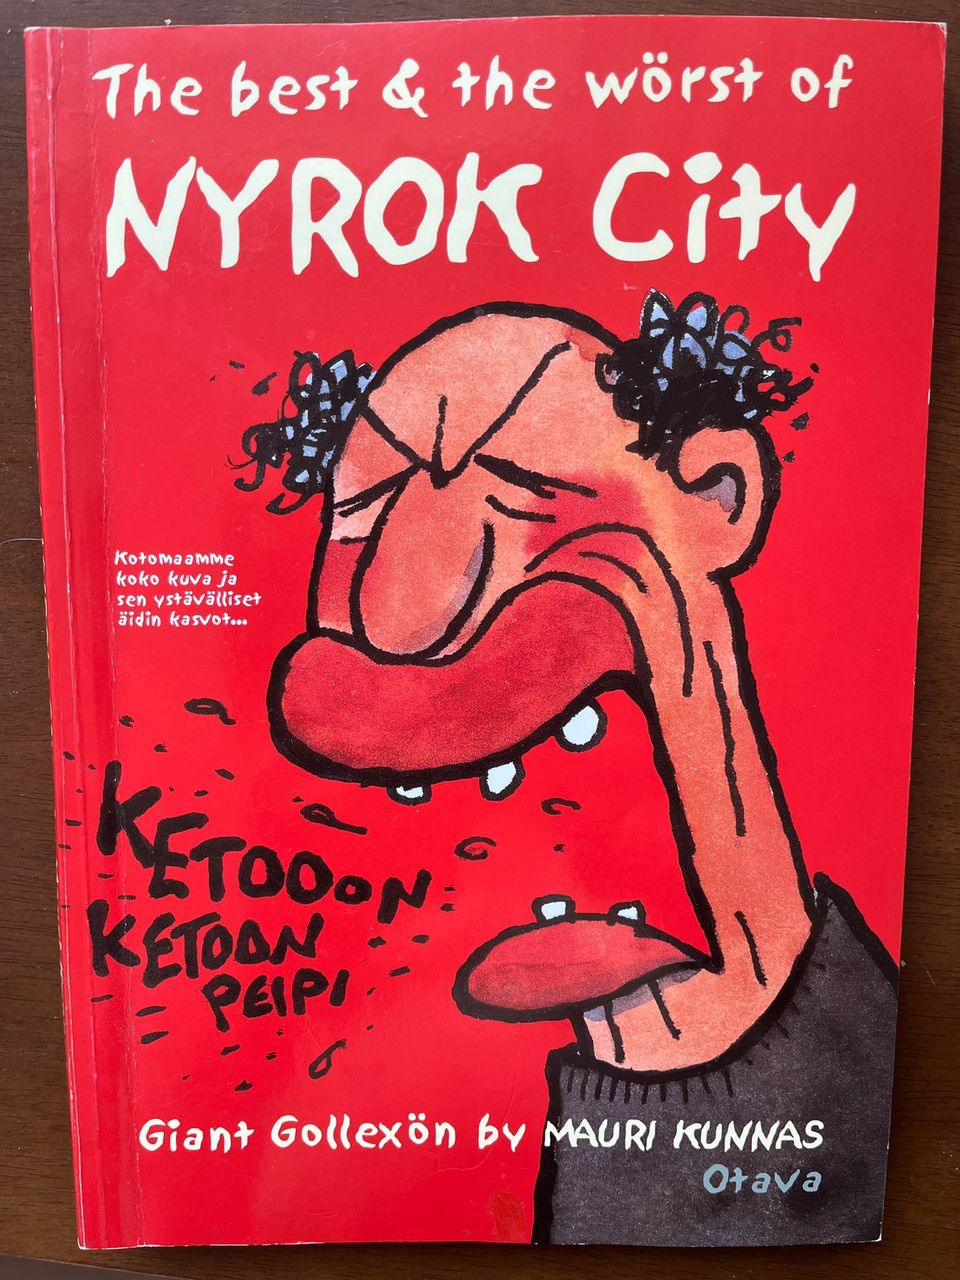 The best & the wörst of Nyrok City